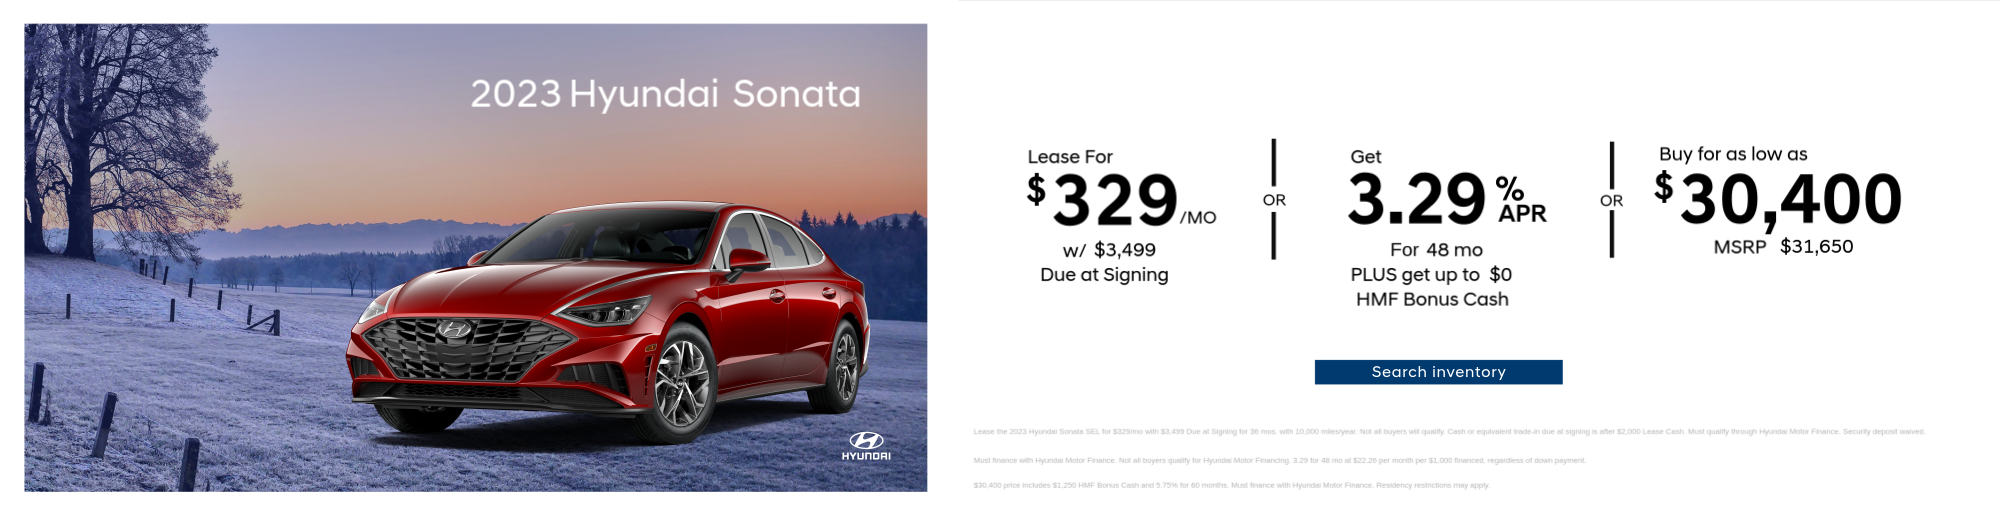 2023 Hyundai Sonata Special Offer